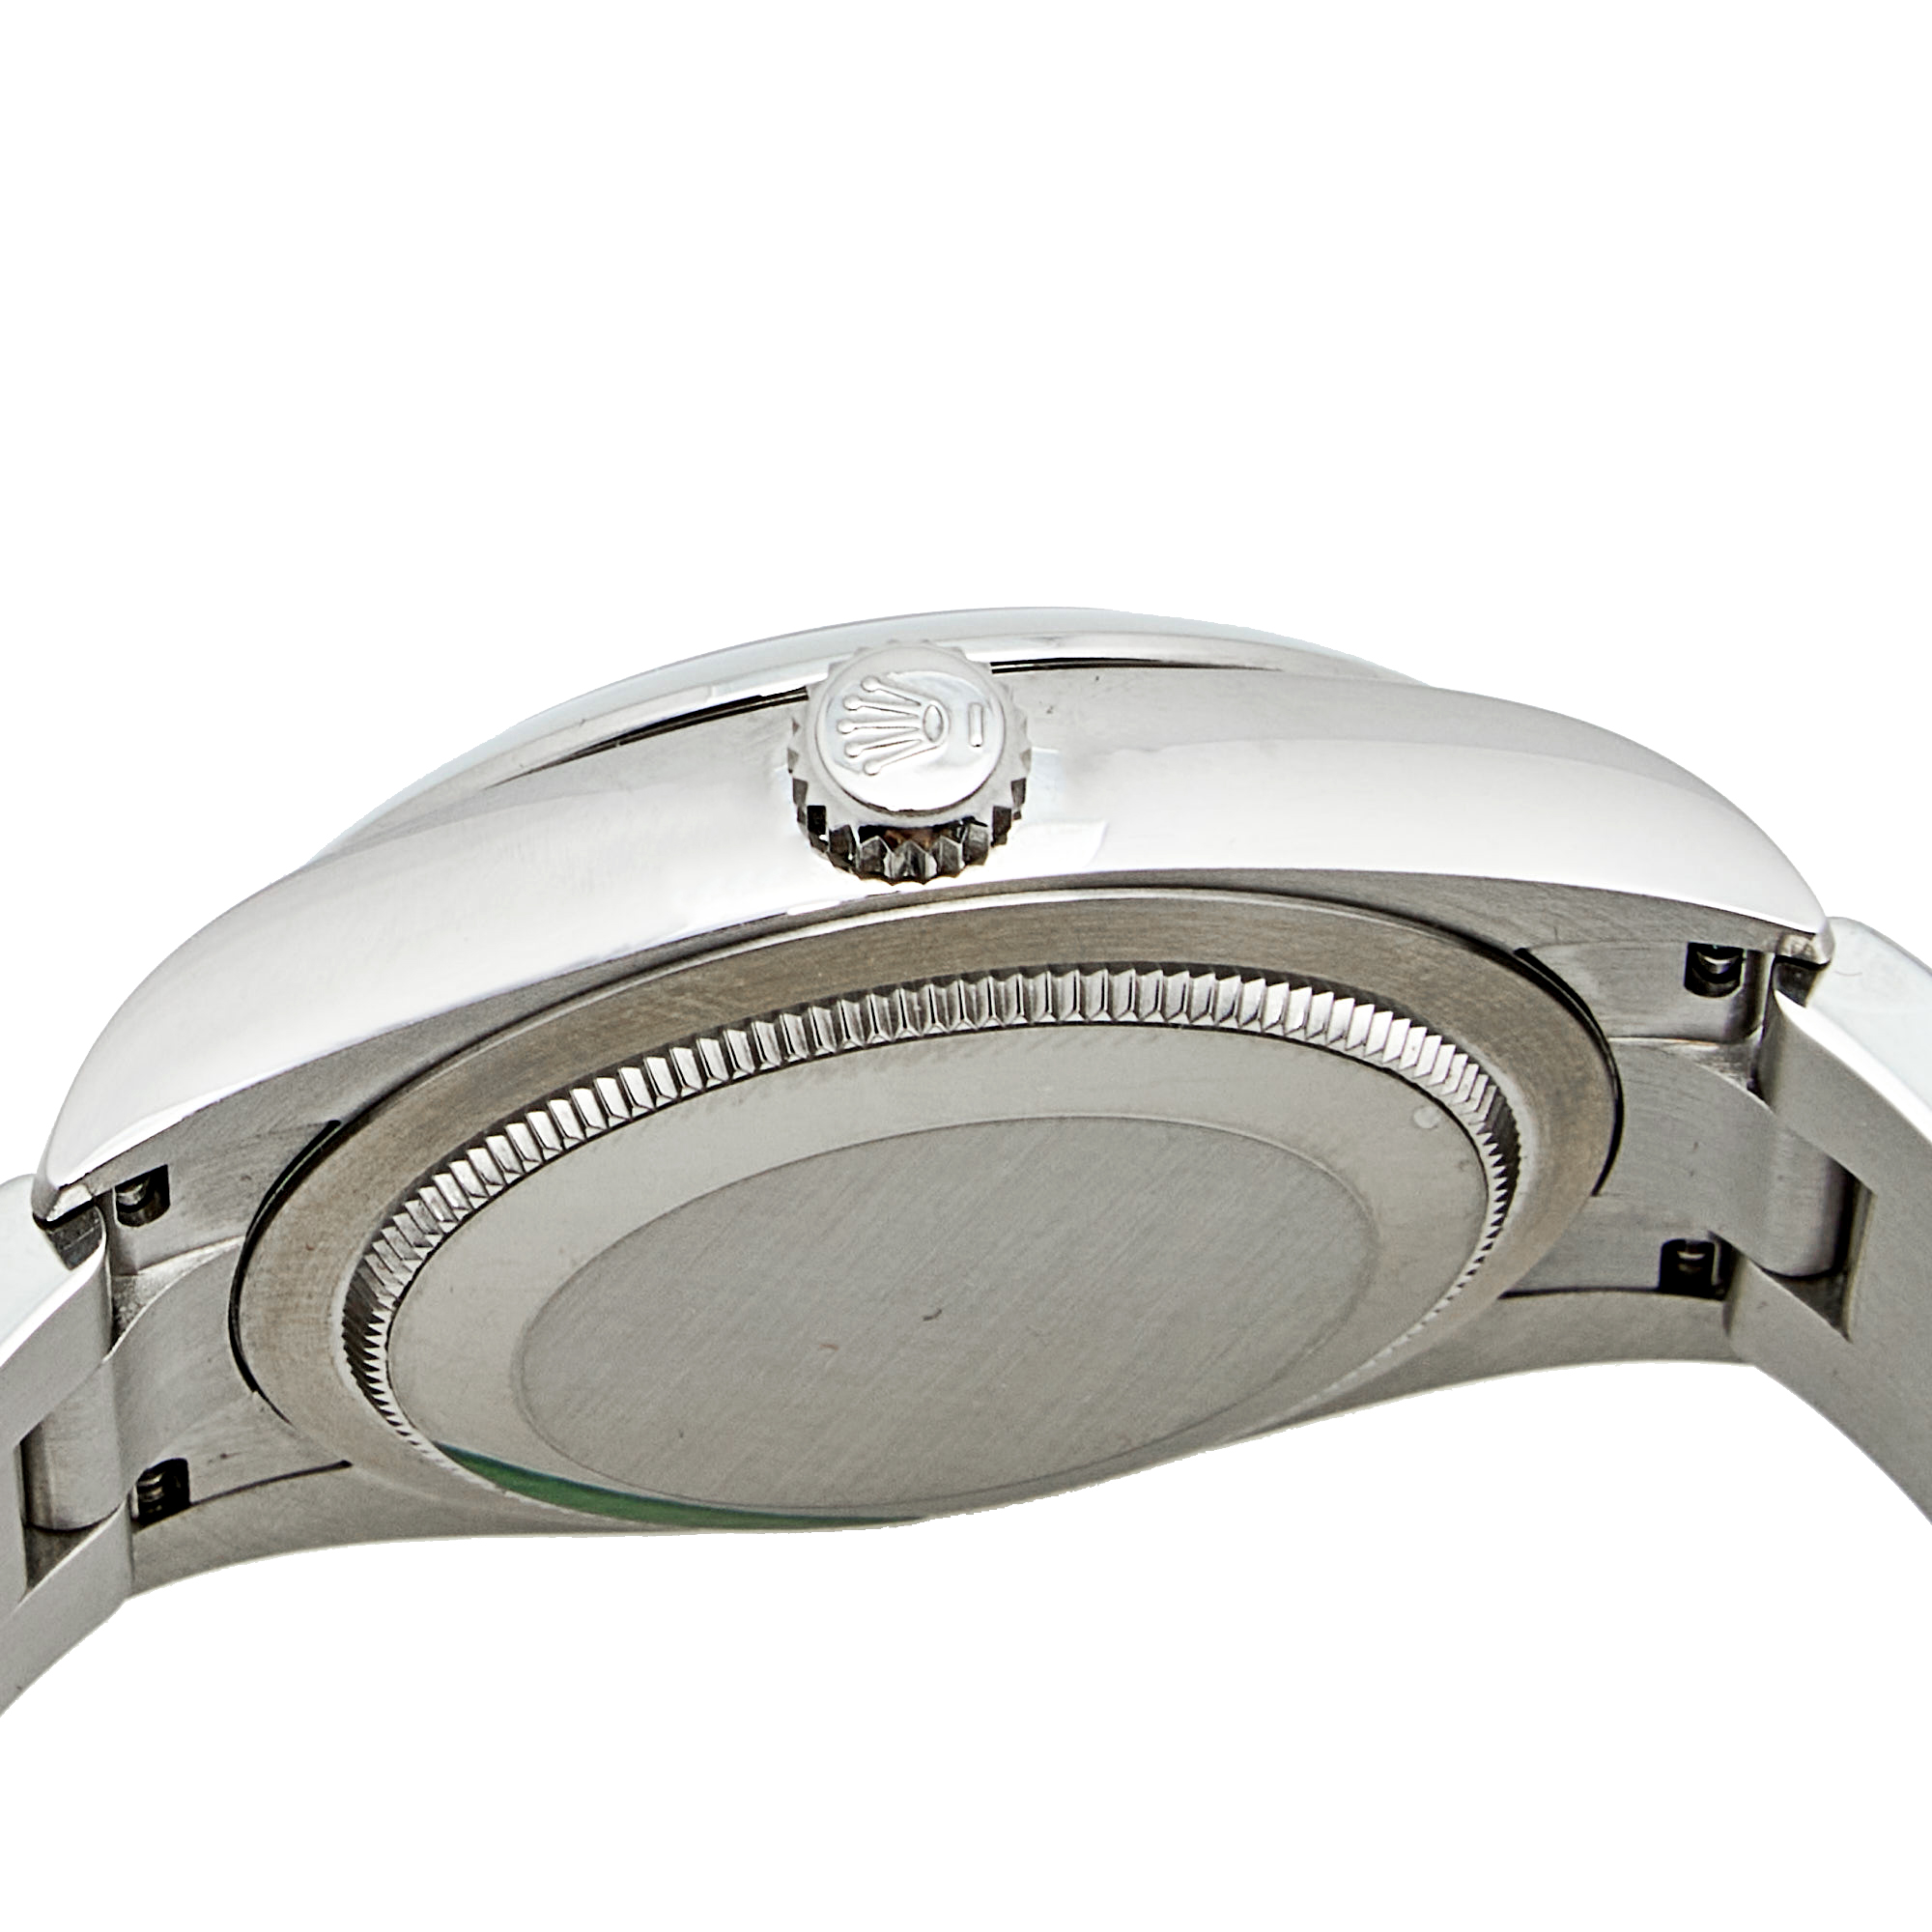 Rolex Black Stainless Steel Oyster Perpetual 124200 Women's Wristwatch 34 Mm